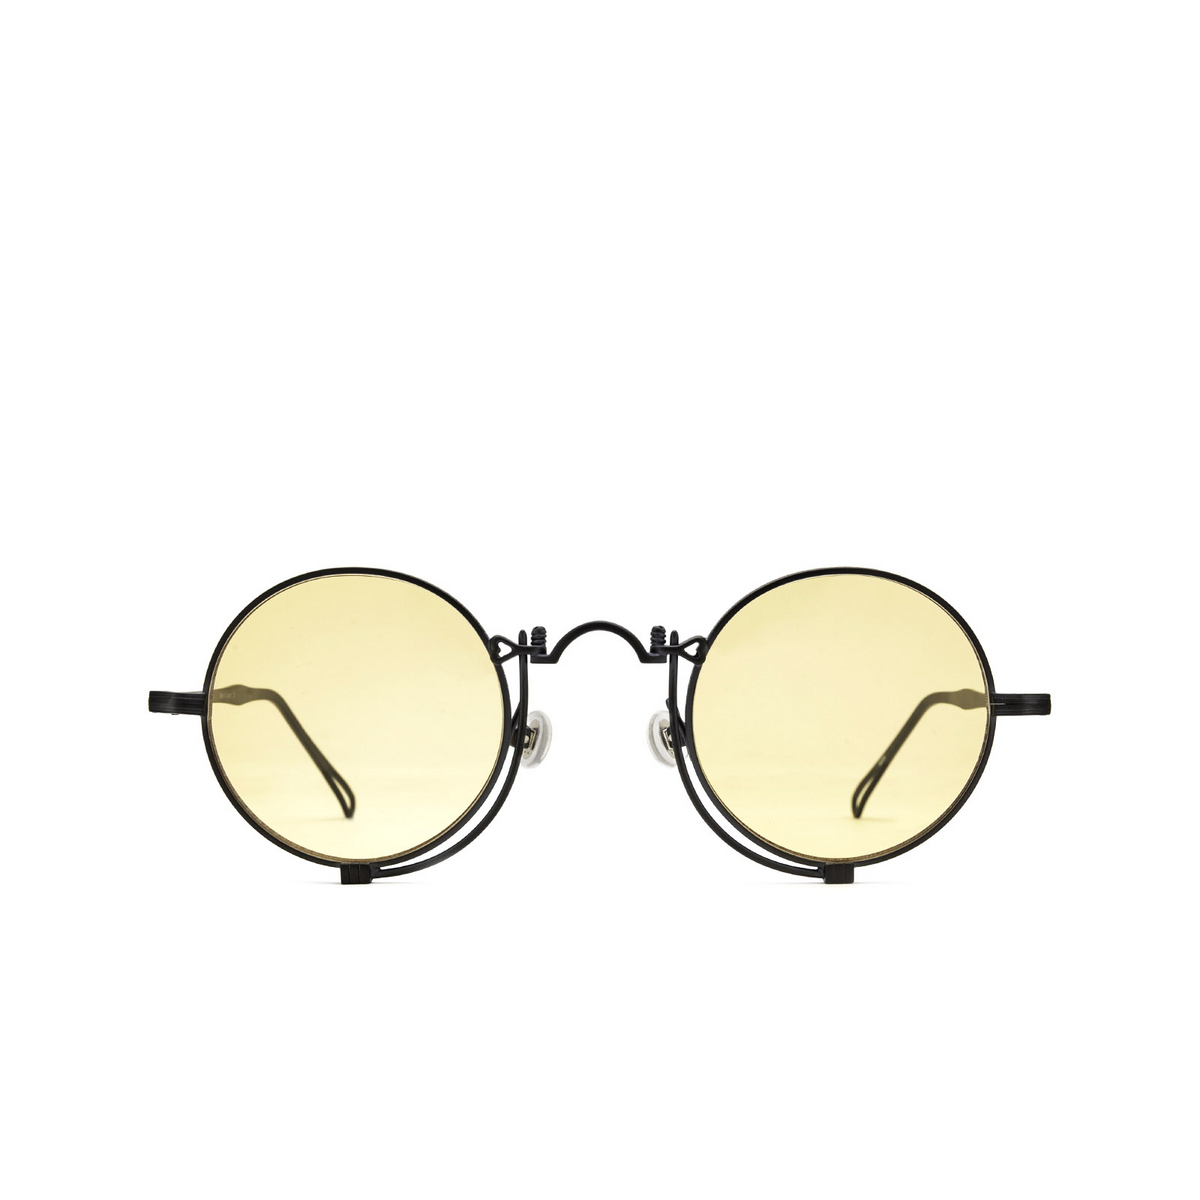 Matsuda® Round Sunglasses: 10601H color Matte Black Mbk - front view.